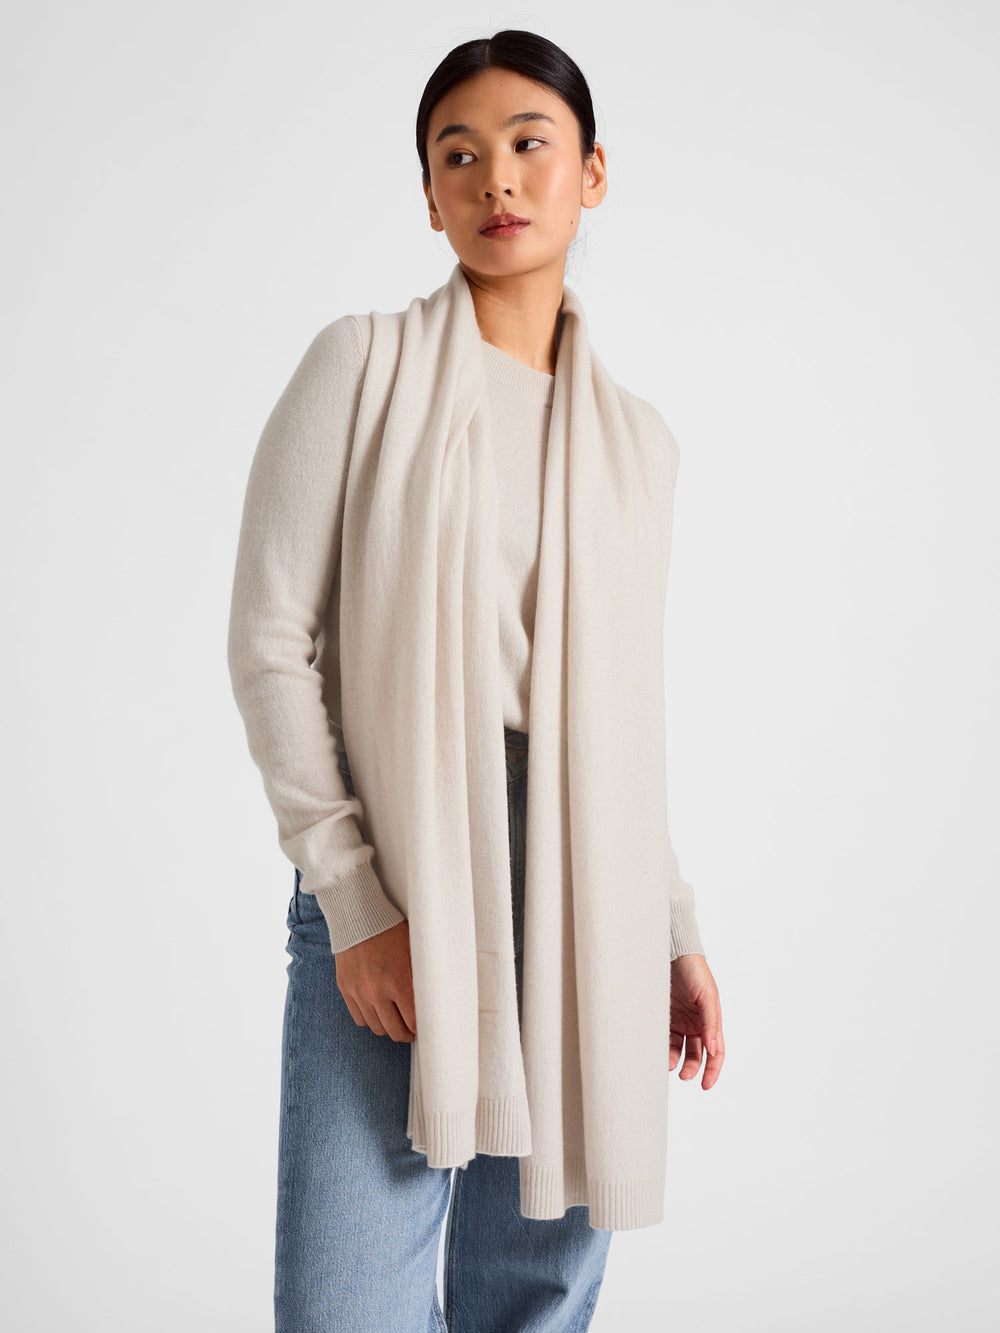 Cashmere scarf in 100% cashmere. Color: Creme. Scandinavian design by Kashmina.